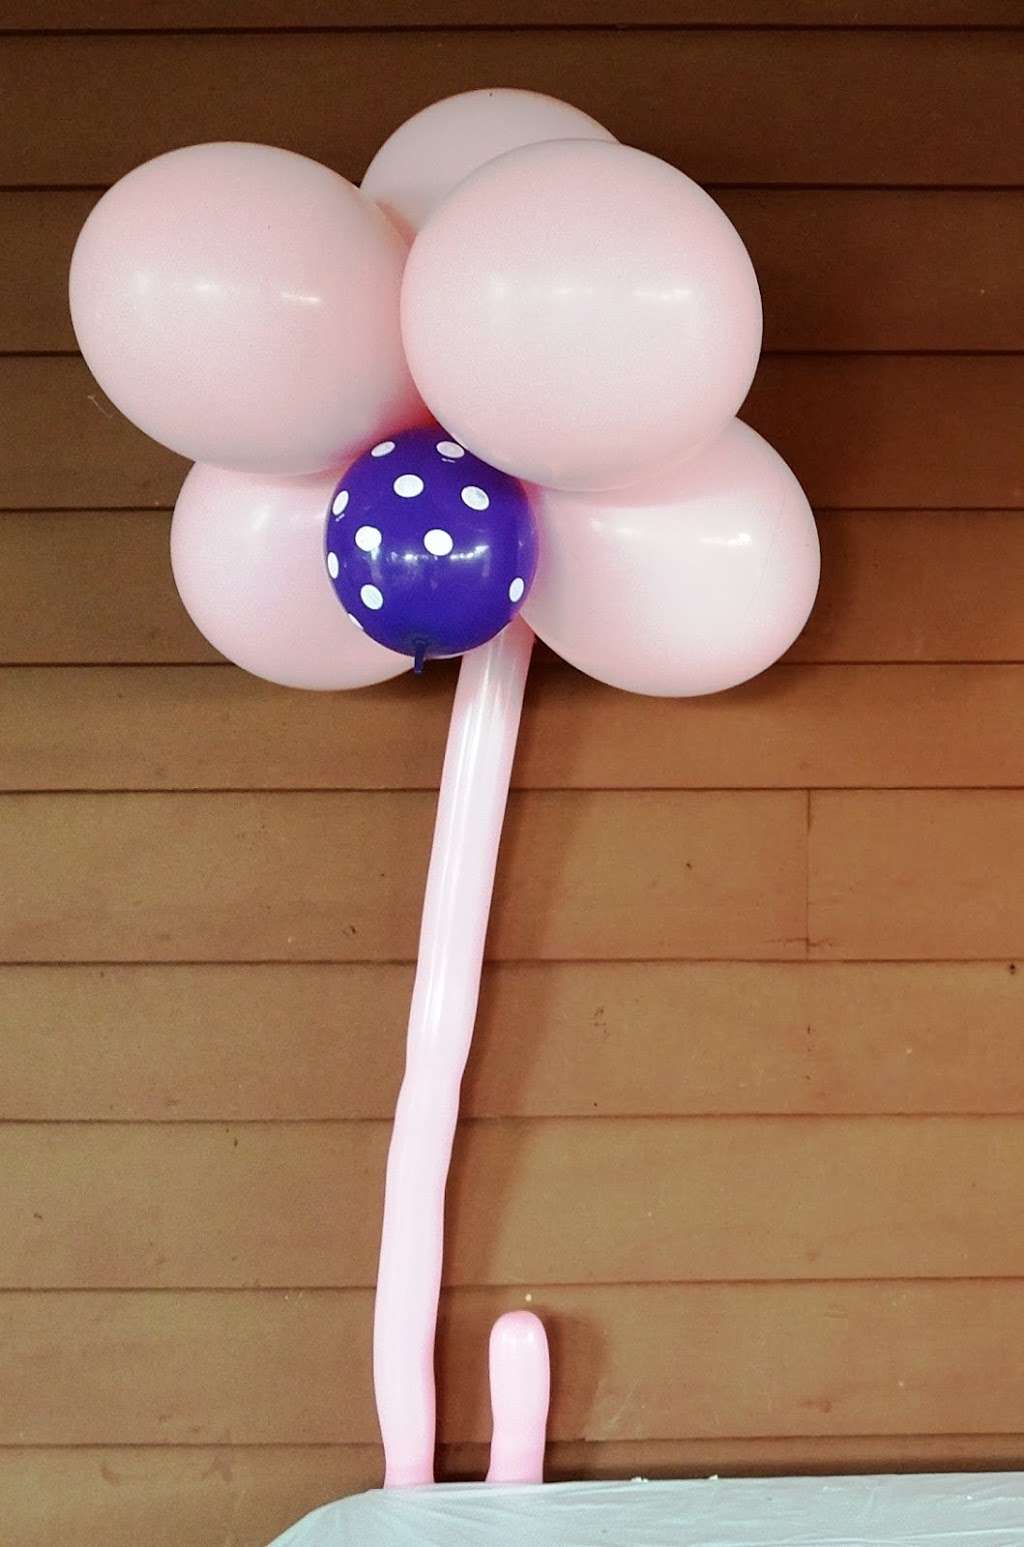 American Balloon Factory | 6379 W 110th St, Overland Park, KS 66211 | Phone: (800) 210-7328